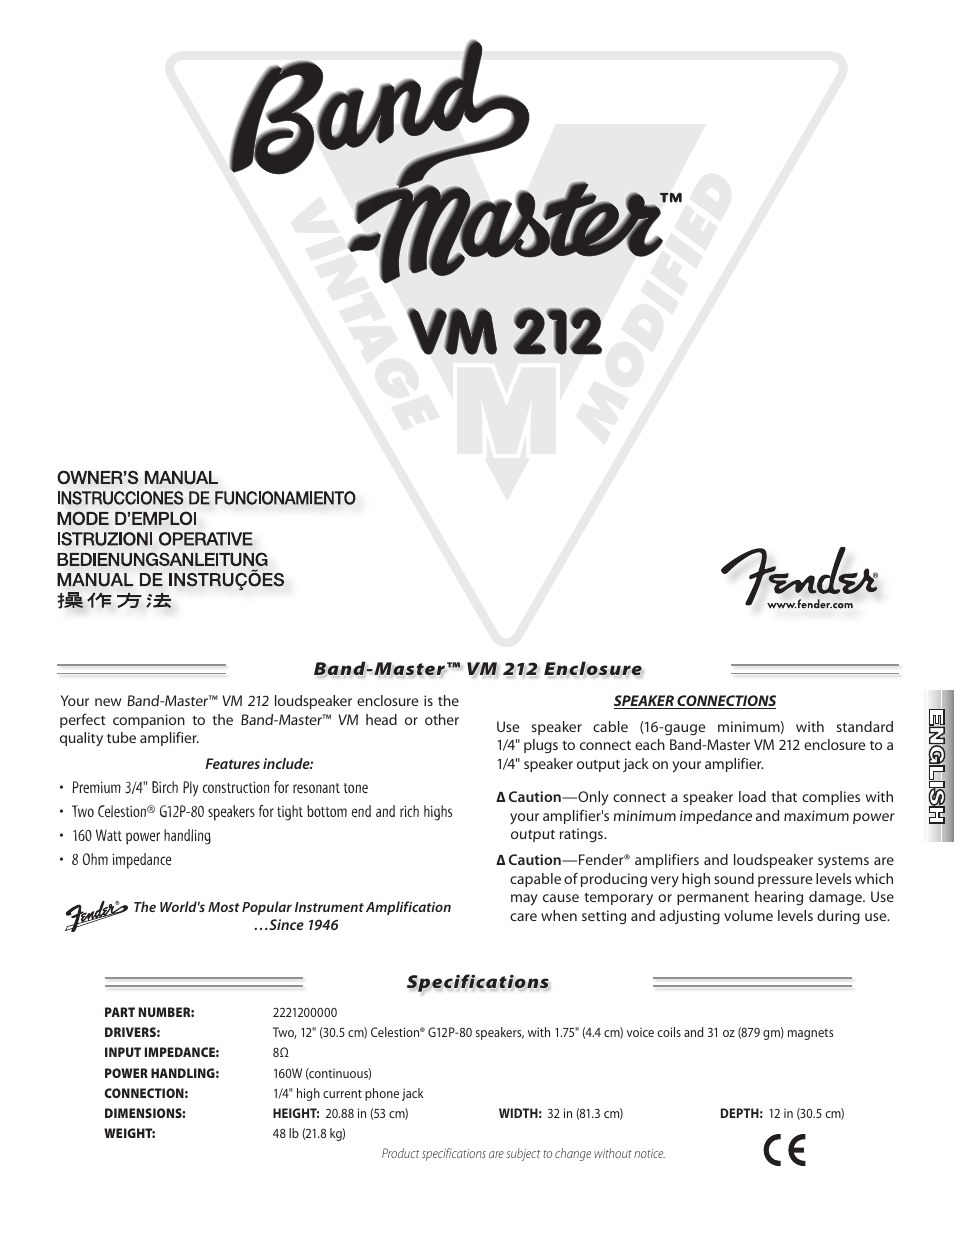 Fender Band-Master VM 212 Enclosure User Manual | 4 pages